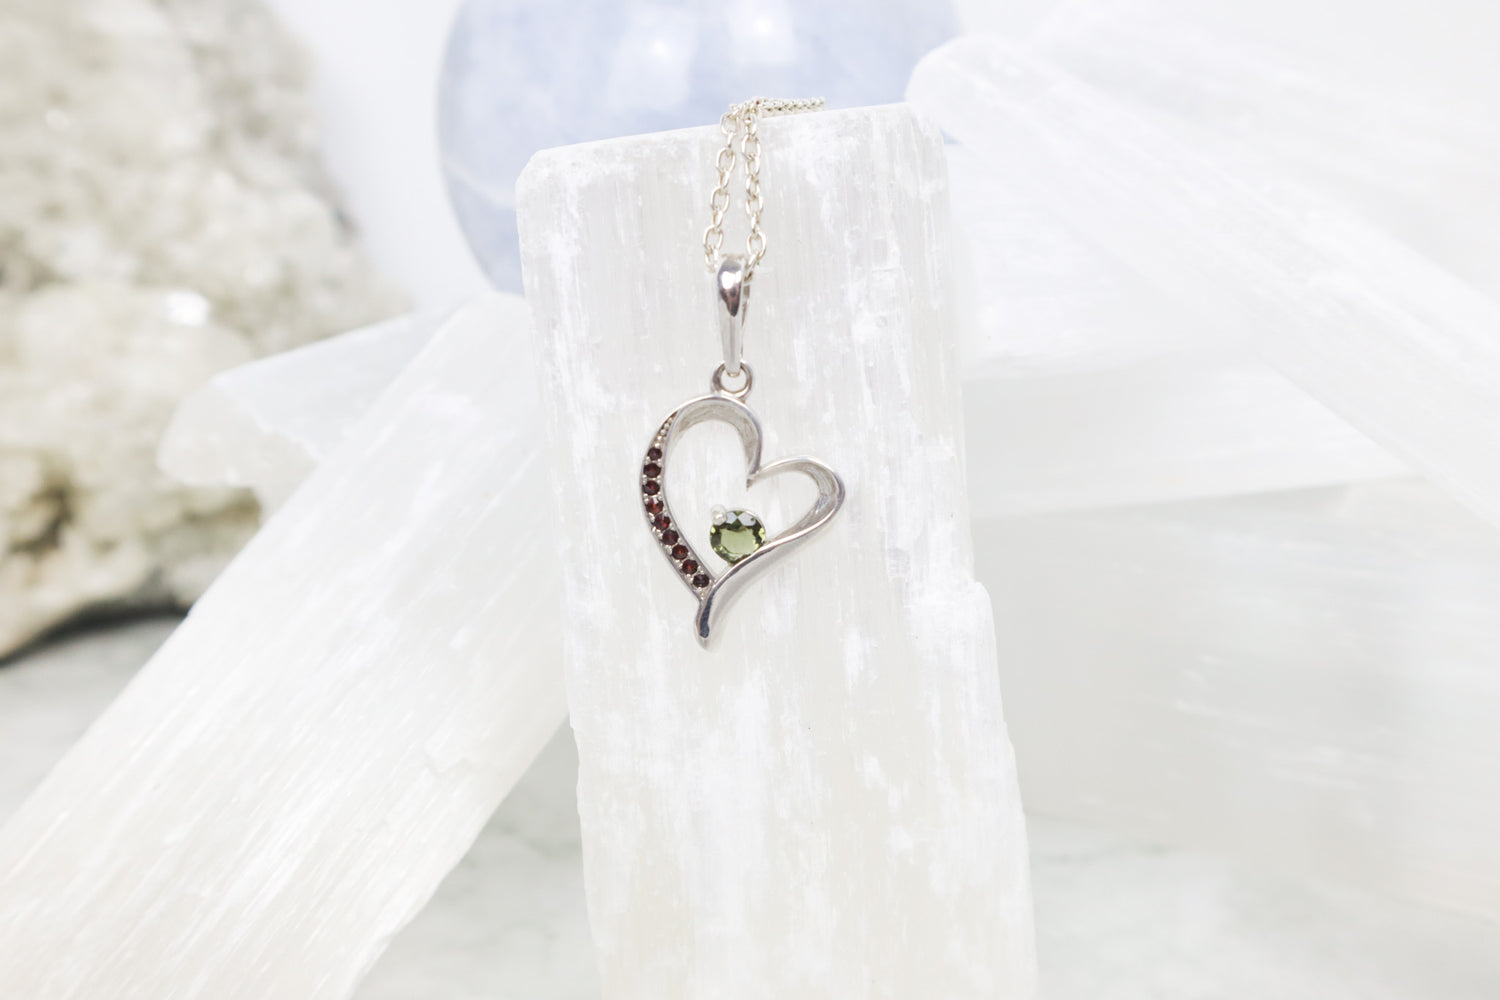 Moldavite heart pendant with garnet crystals